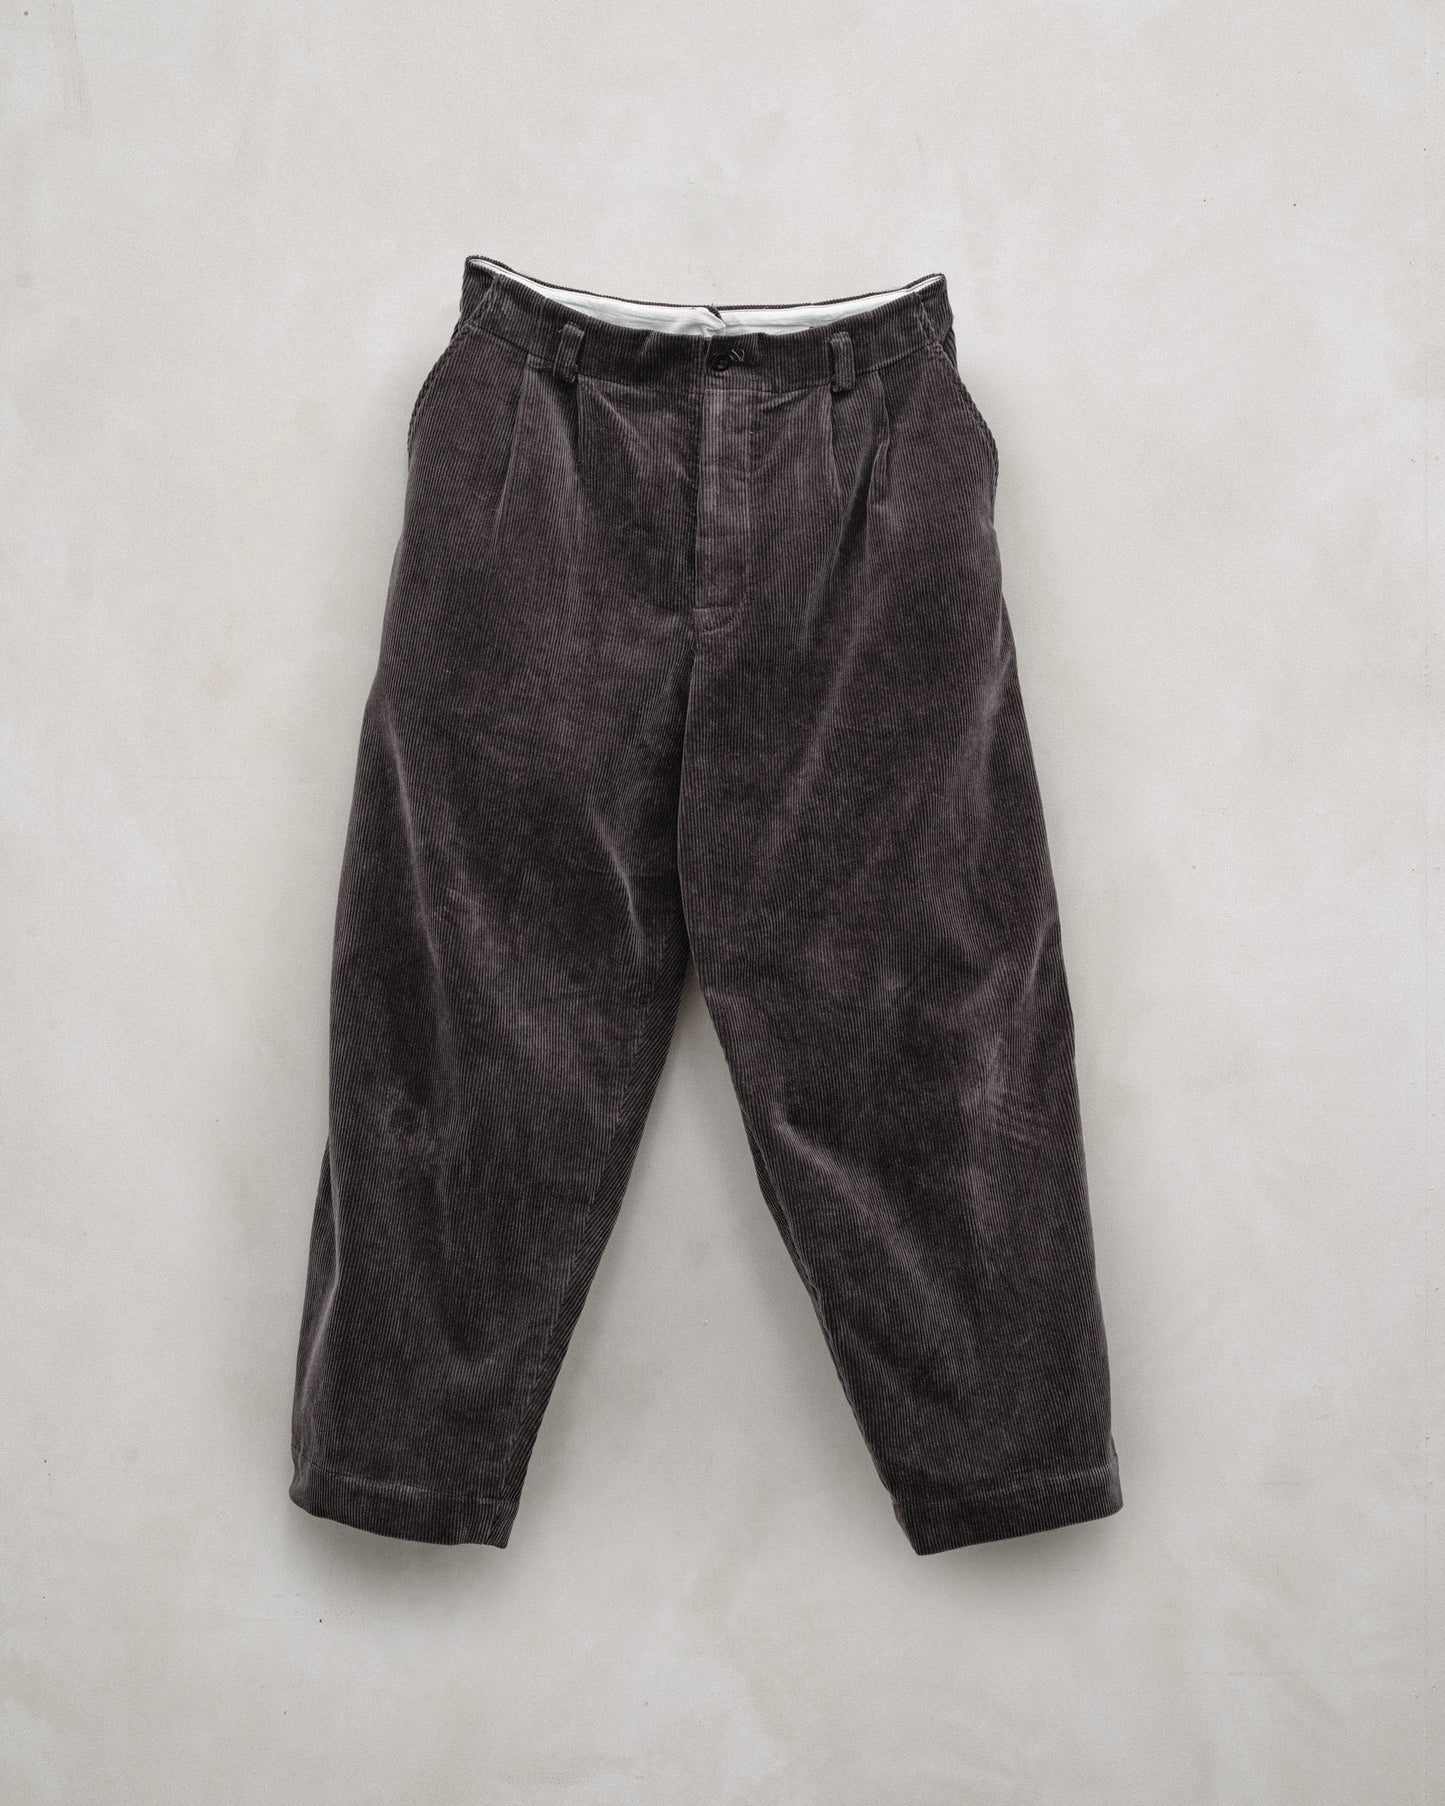 Two Pleat Pant - Cotton Corduroy, Dark Taupe